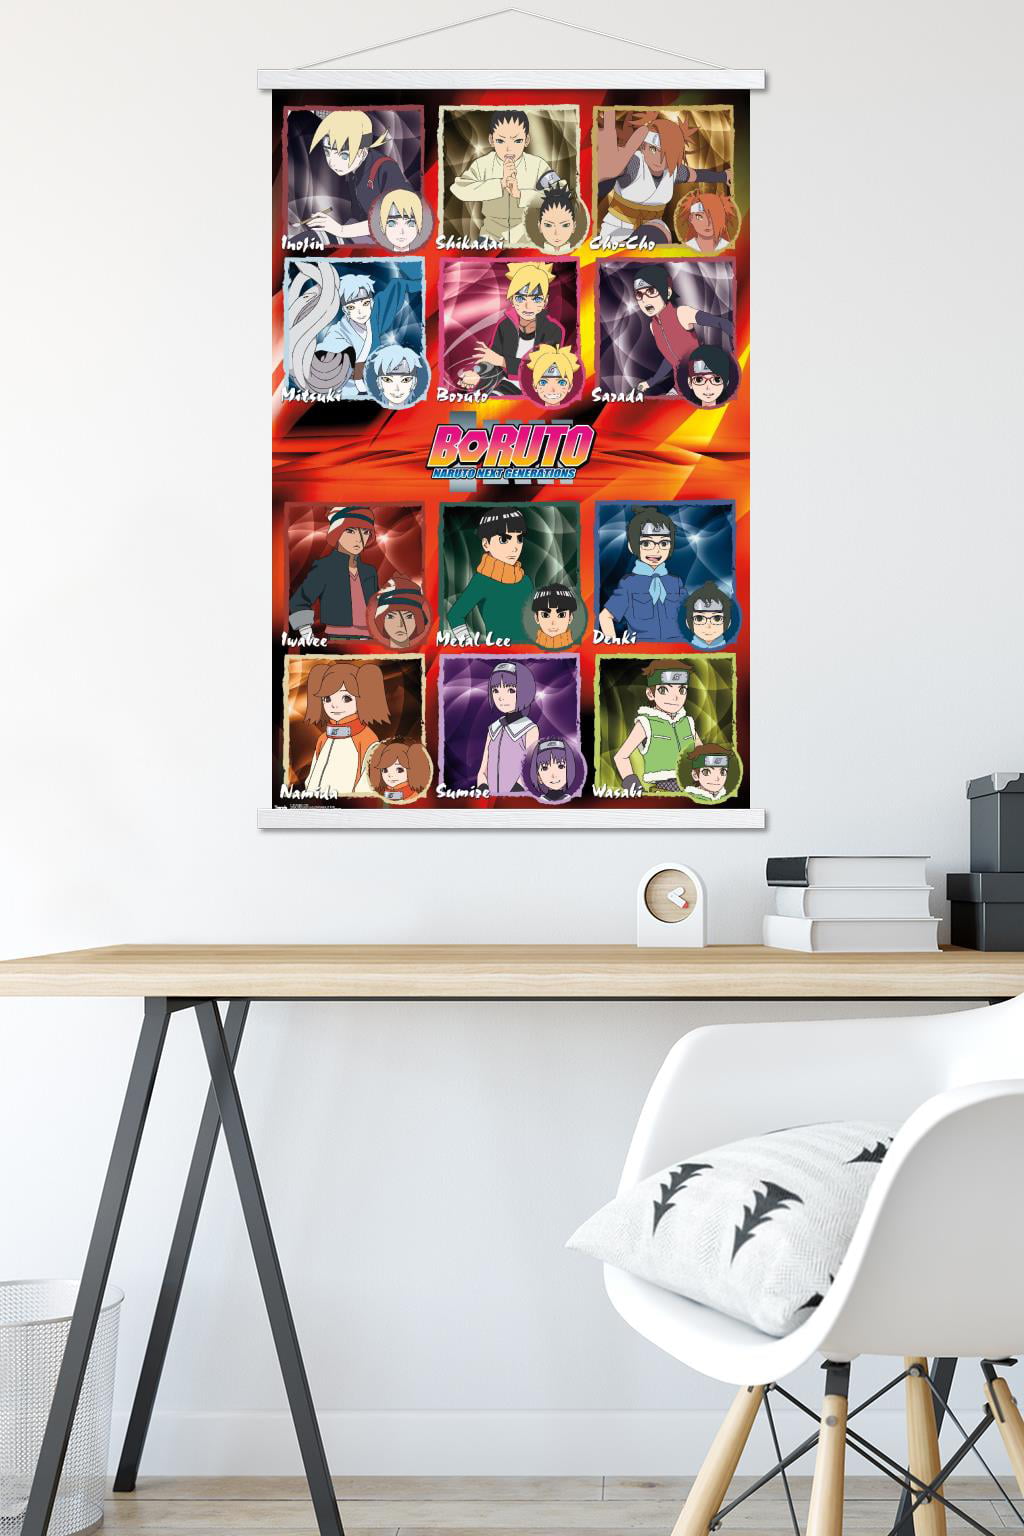 Boruto: Naruto Next Generations - Grid Wall Poster, 14.725 x 22.375 